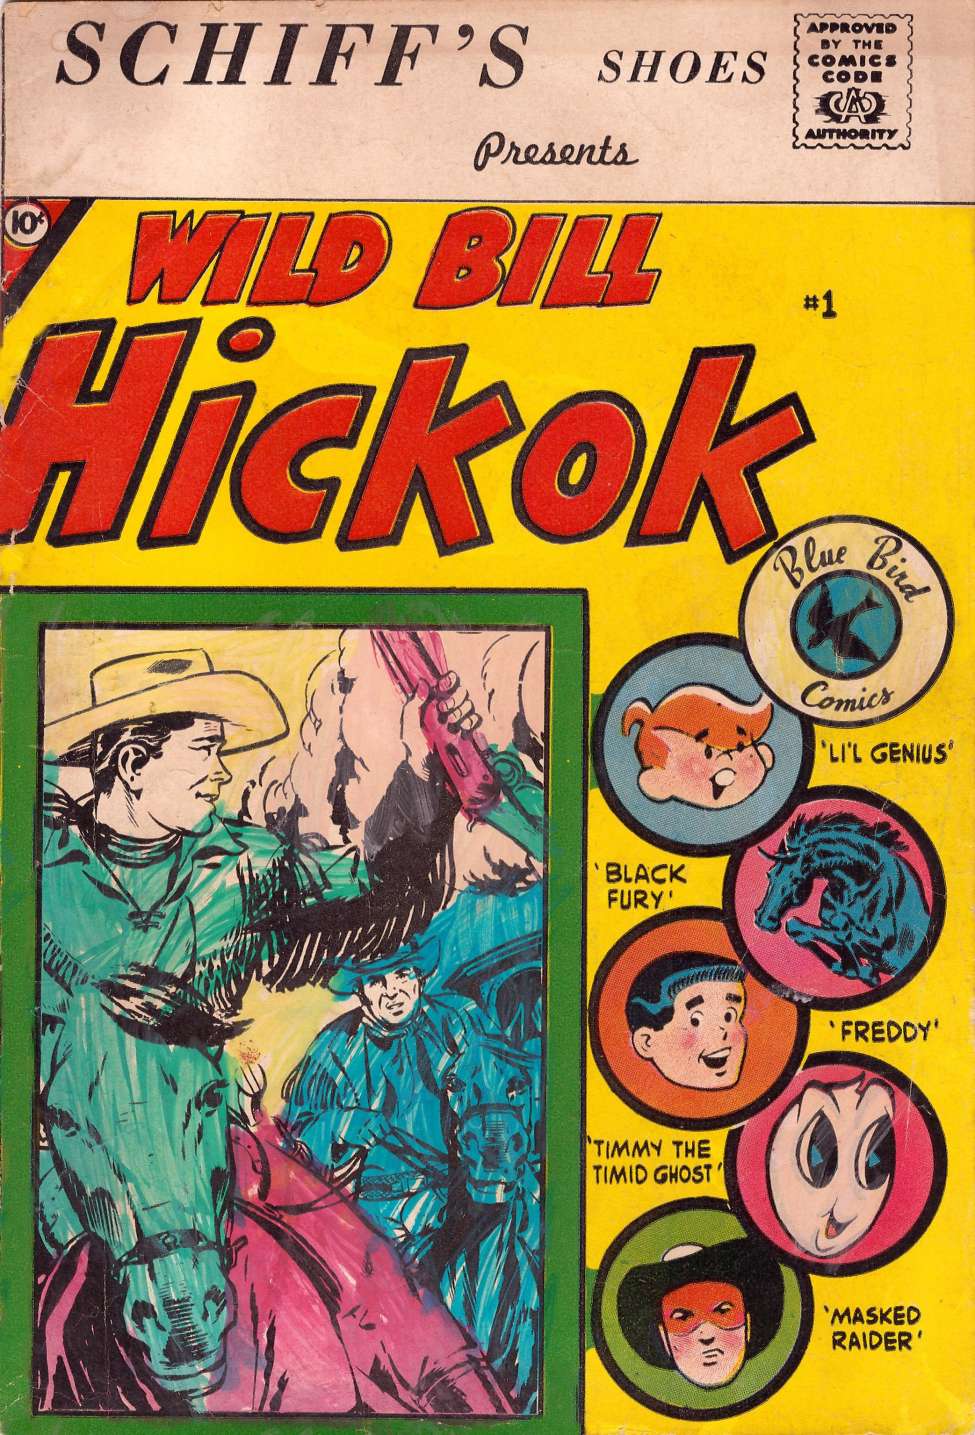 Comic Book Cover For Wild Bill Hickok 1 (Blue Bird)